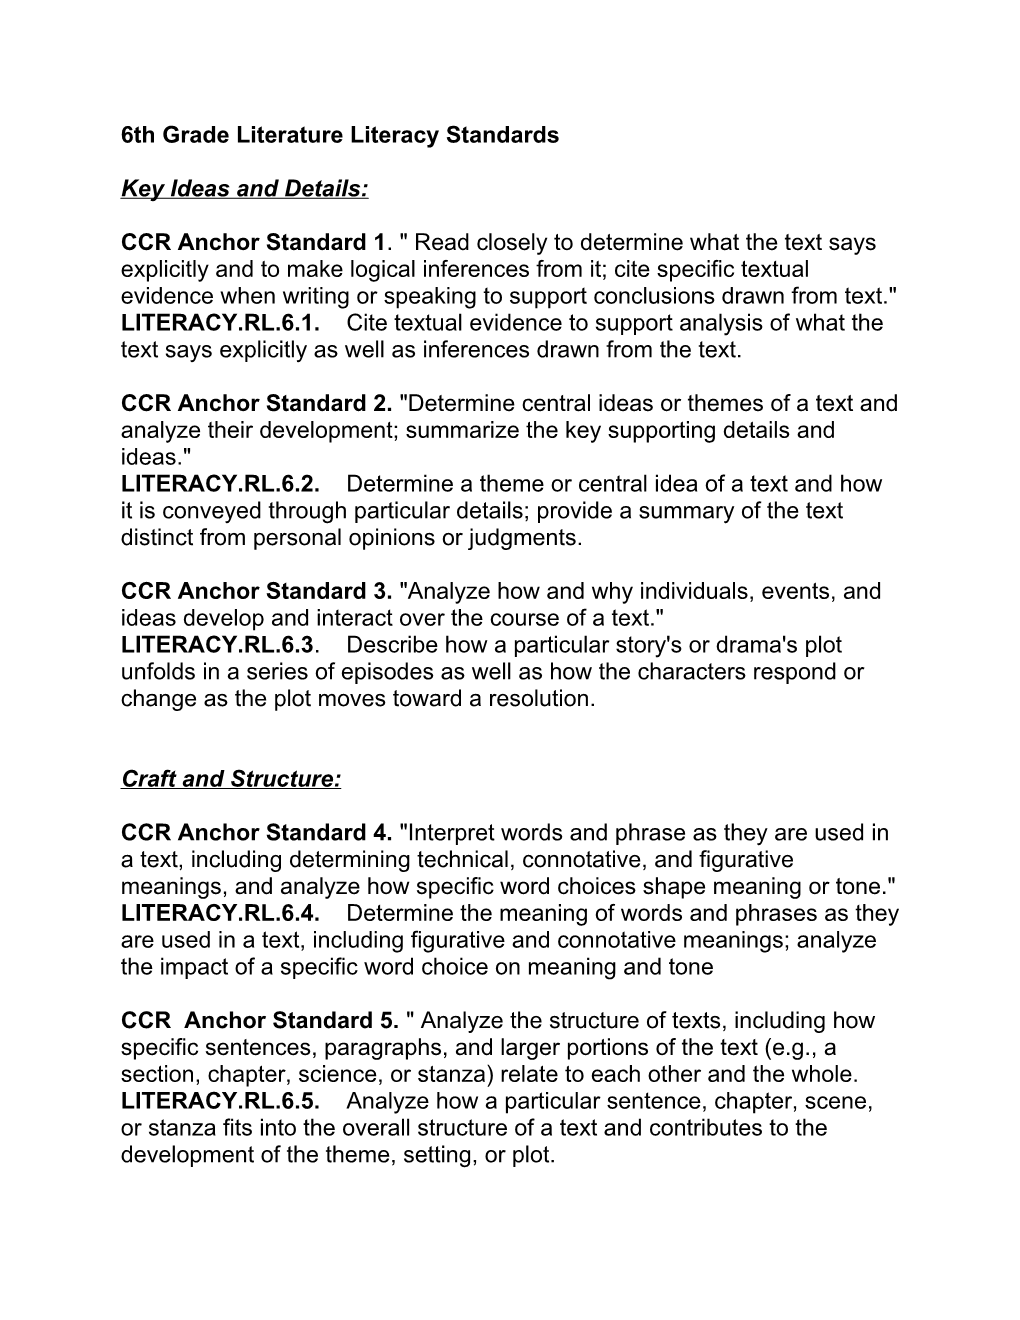 6Th Grade Literature Literacy Standards